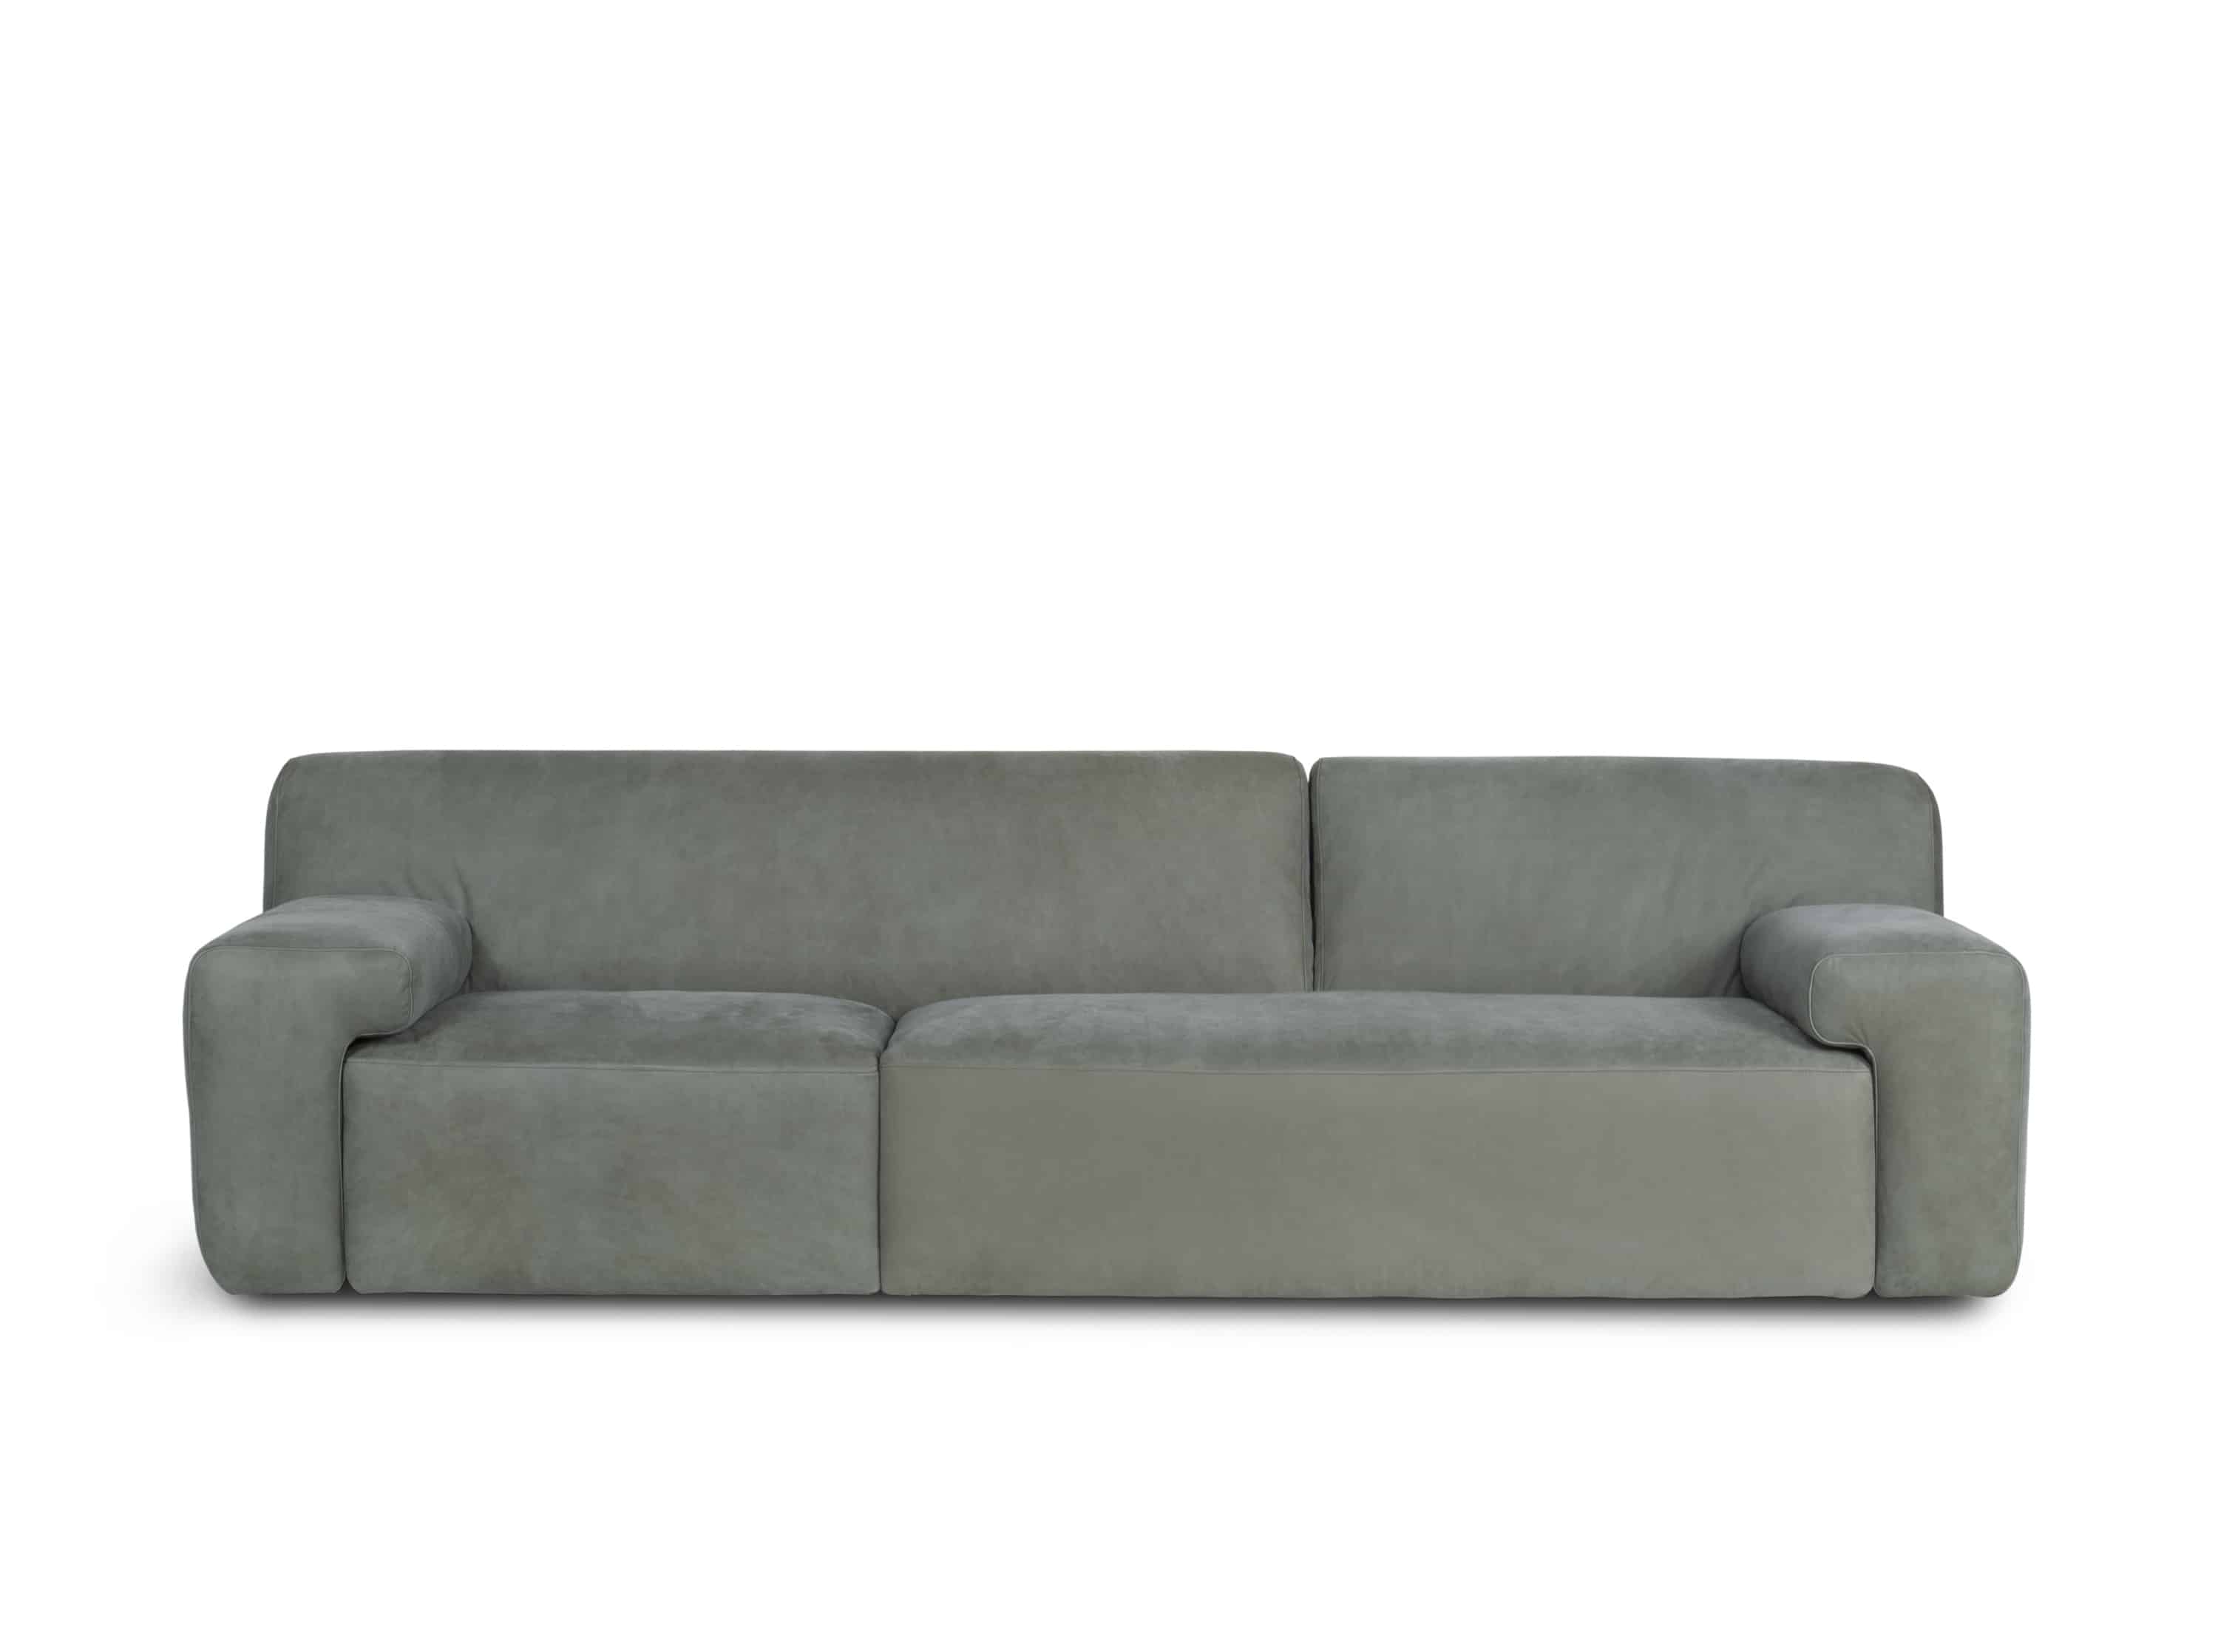 Greenapple Almourol Sofa